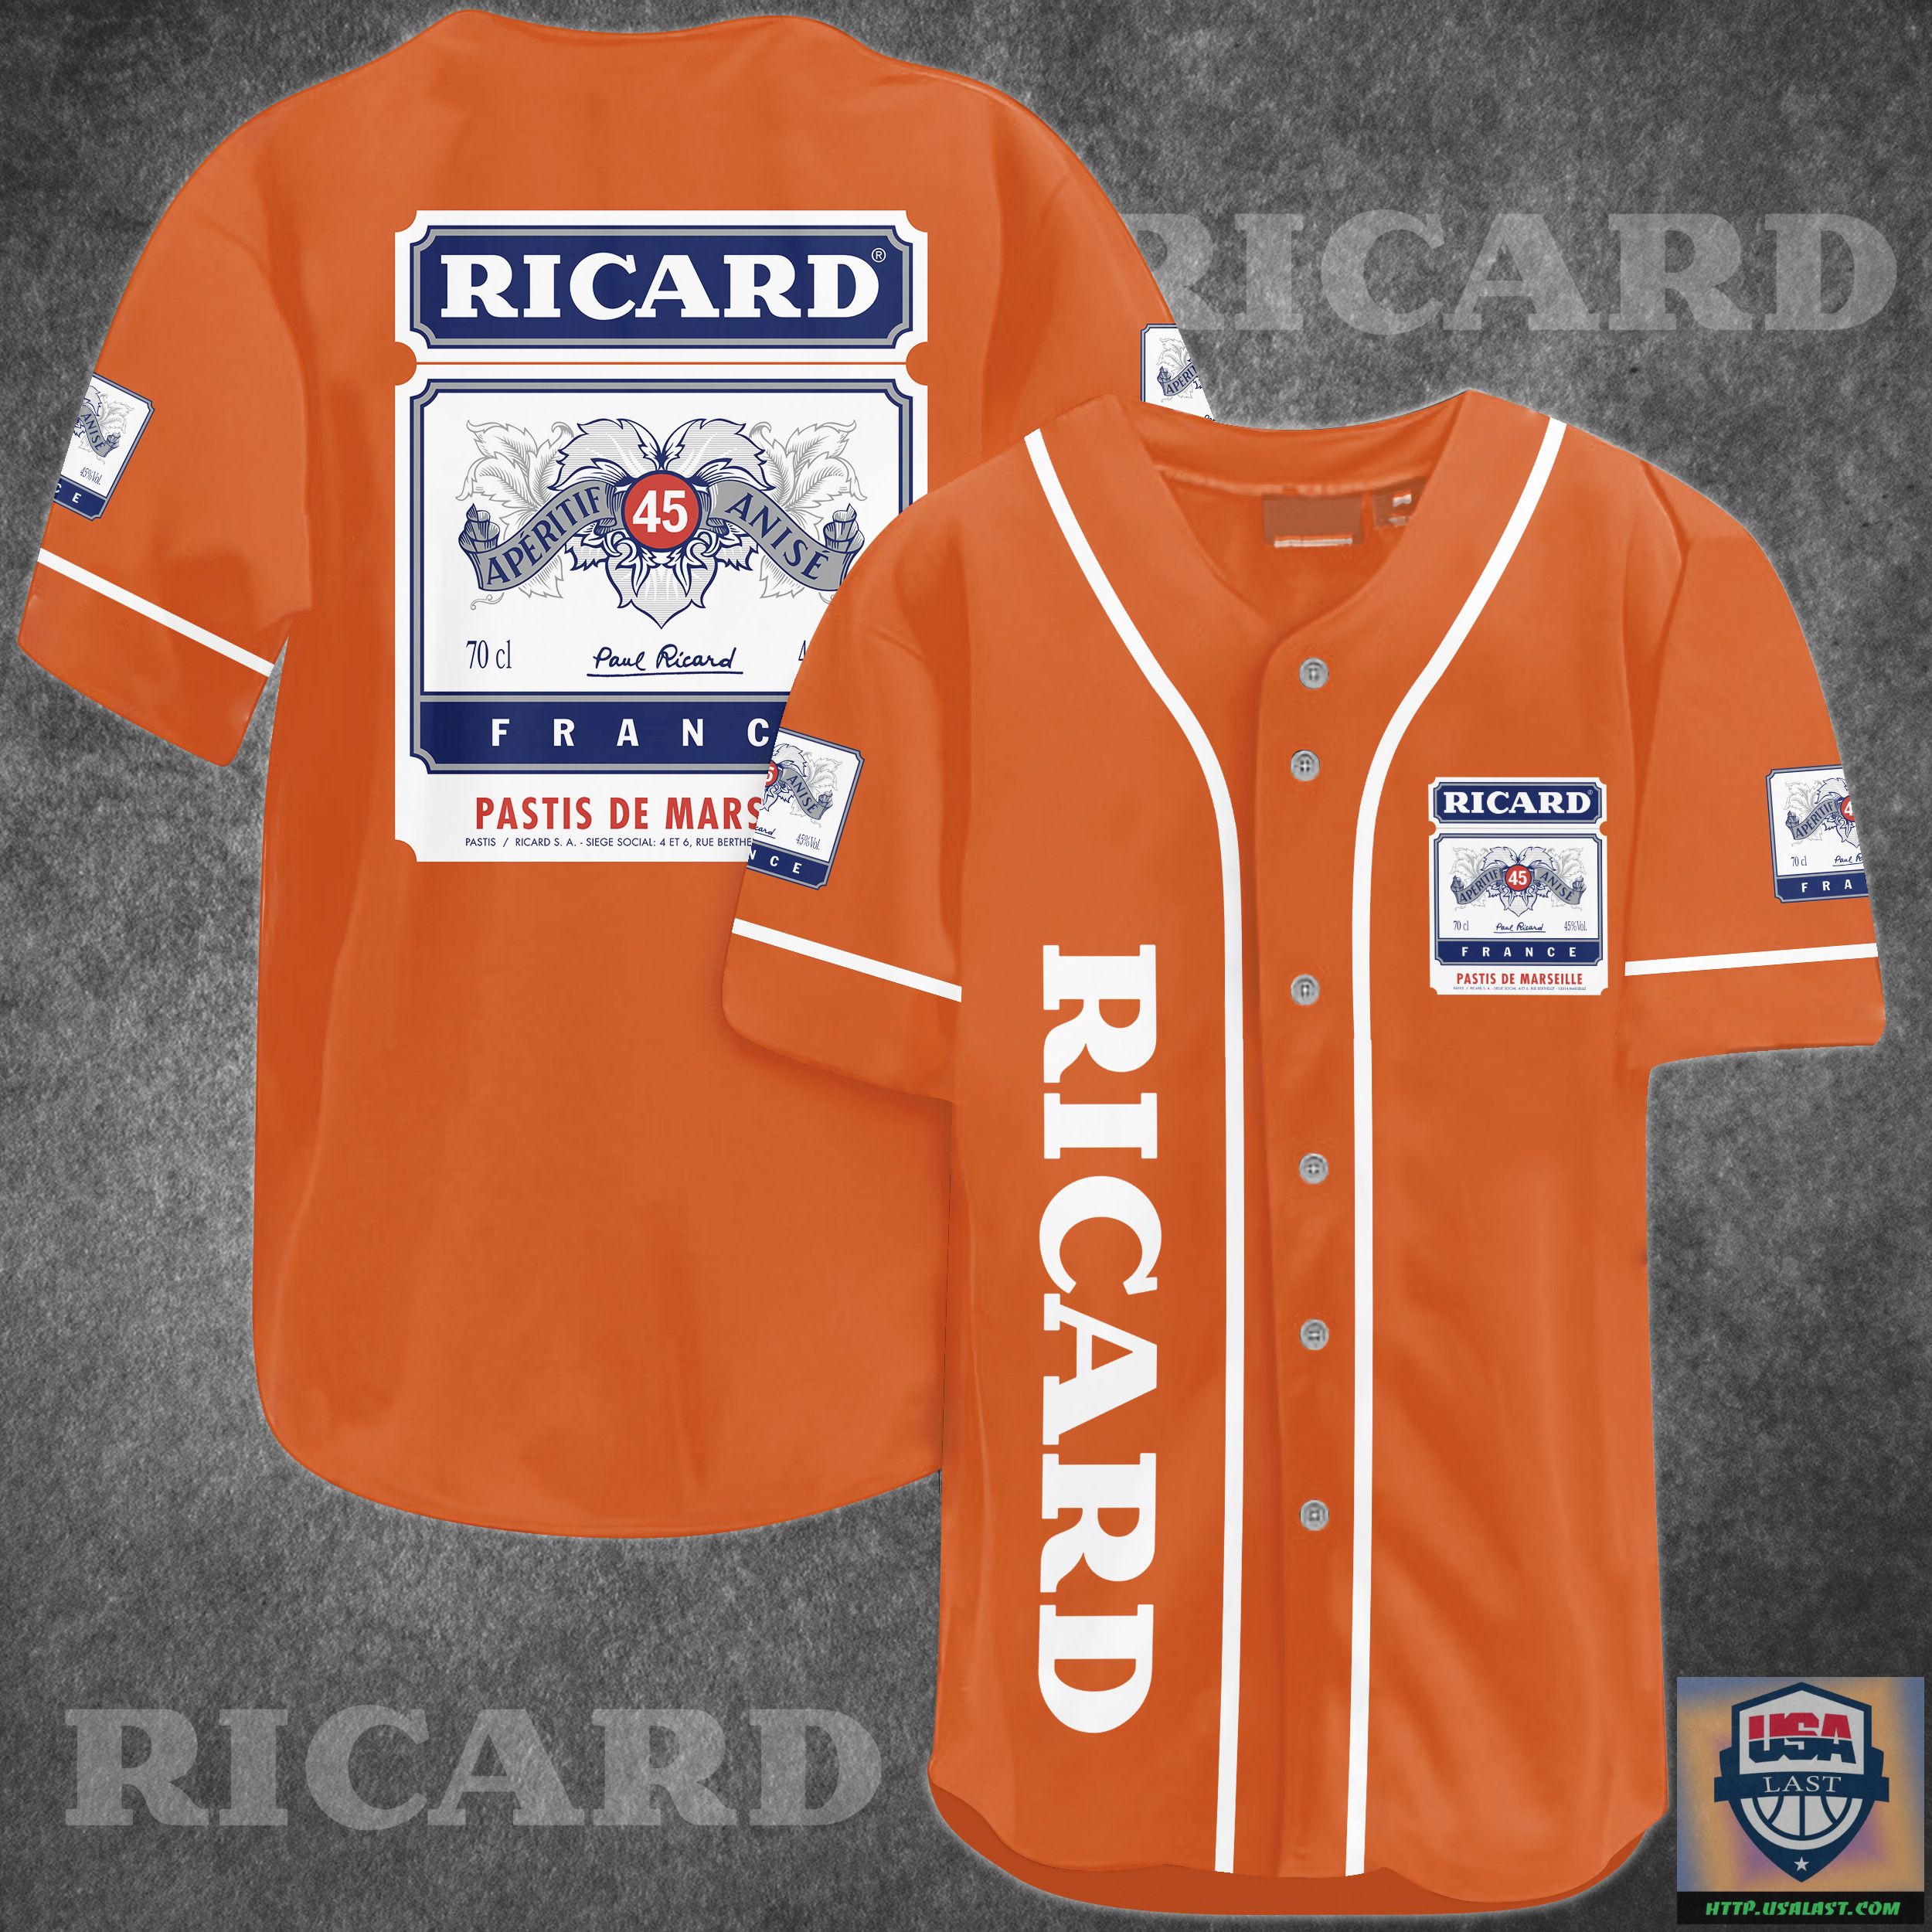 Ricard Wine Baseball Jersey Shirt – Usalast